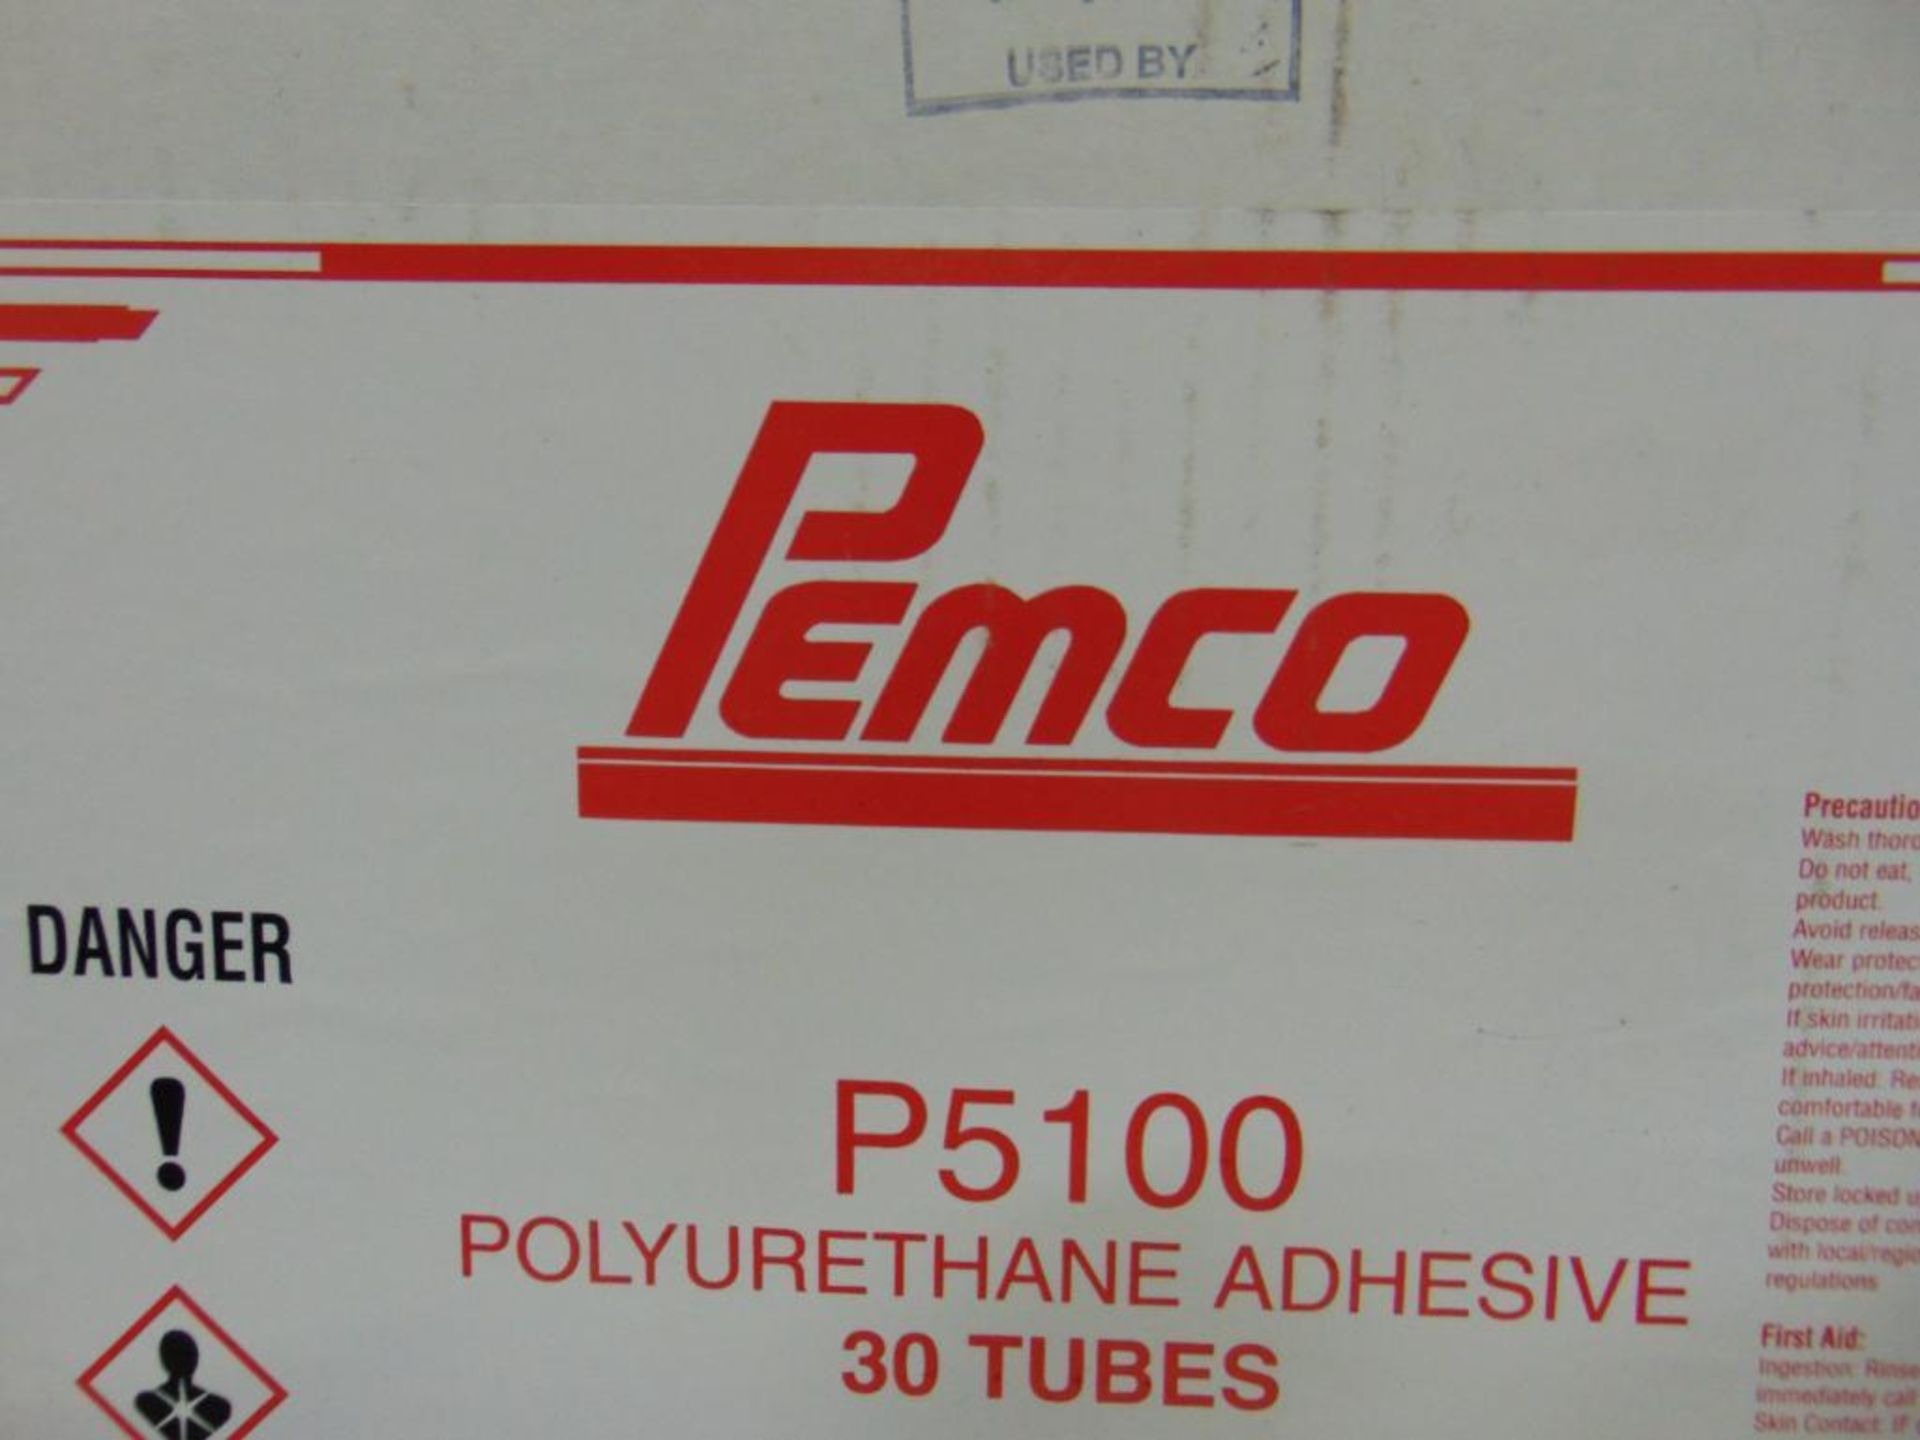 Pemco P5100 Polyurethane Adhesive - Image 4 of 4